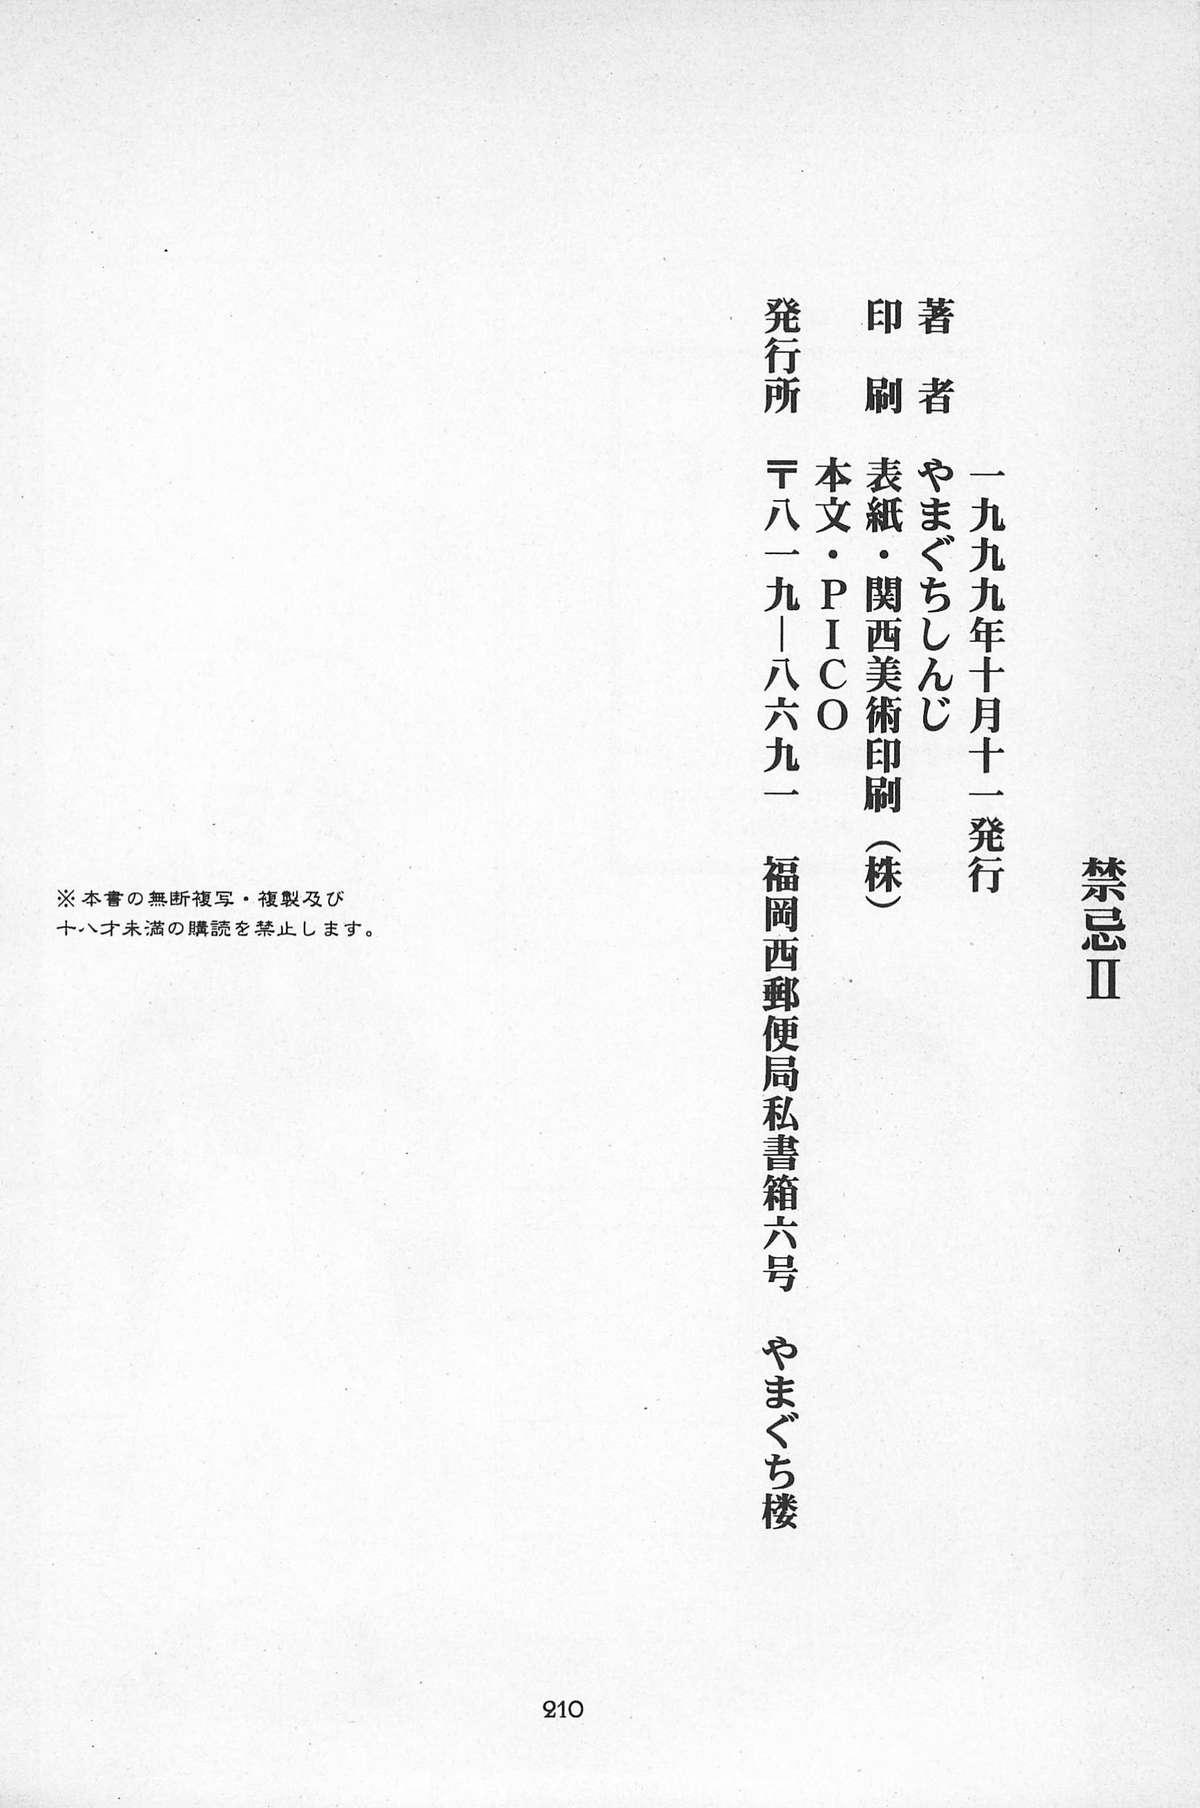 TABOO II THE WORKS OF SHINJI YAMAGUCHI 209